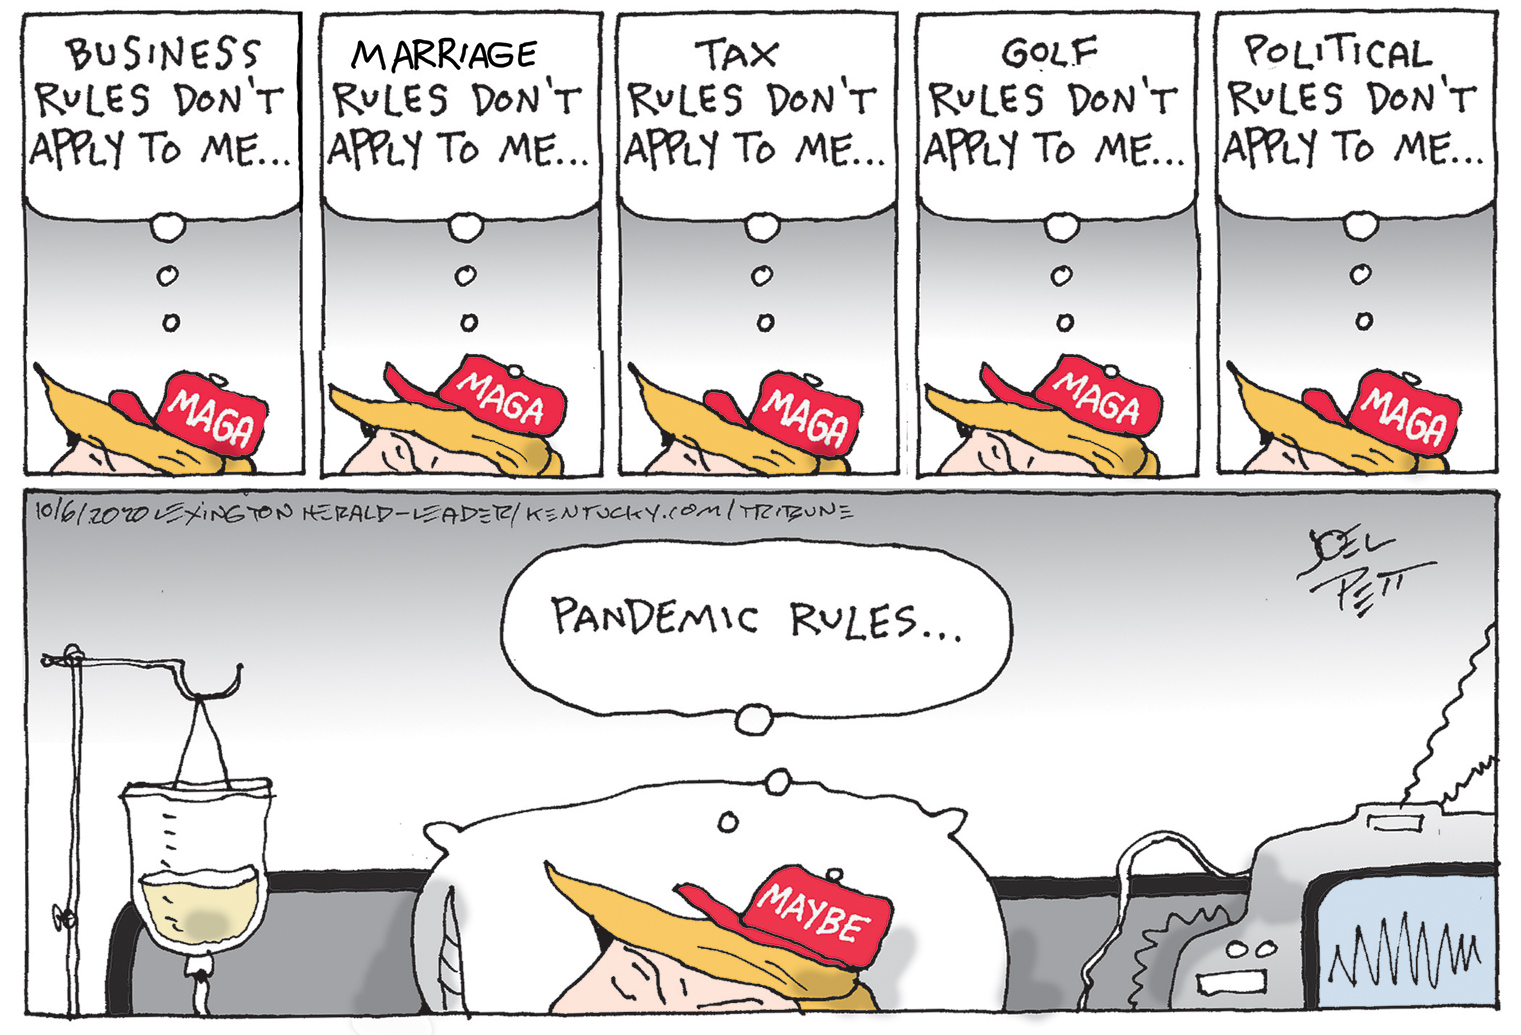 Political Cartoon U.S. Trump COVID&amp;nbsp;